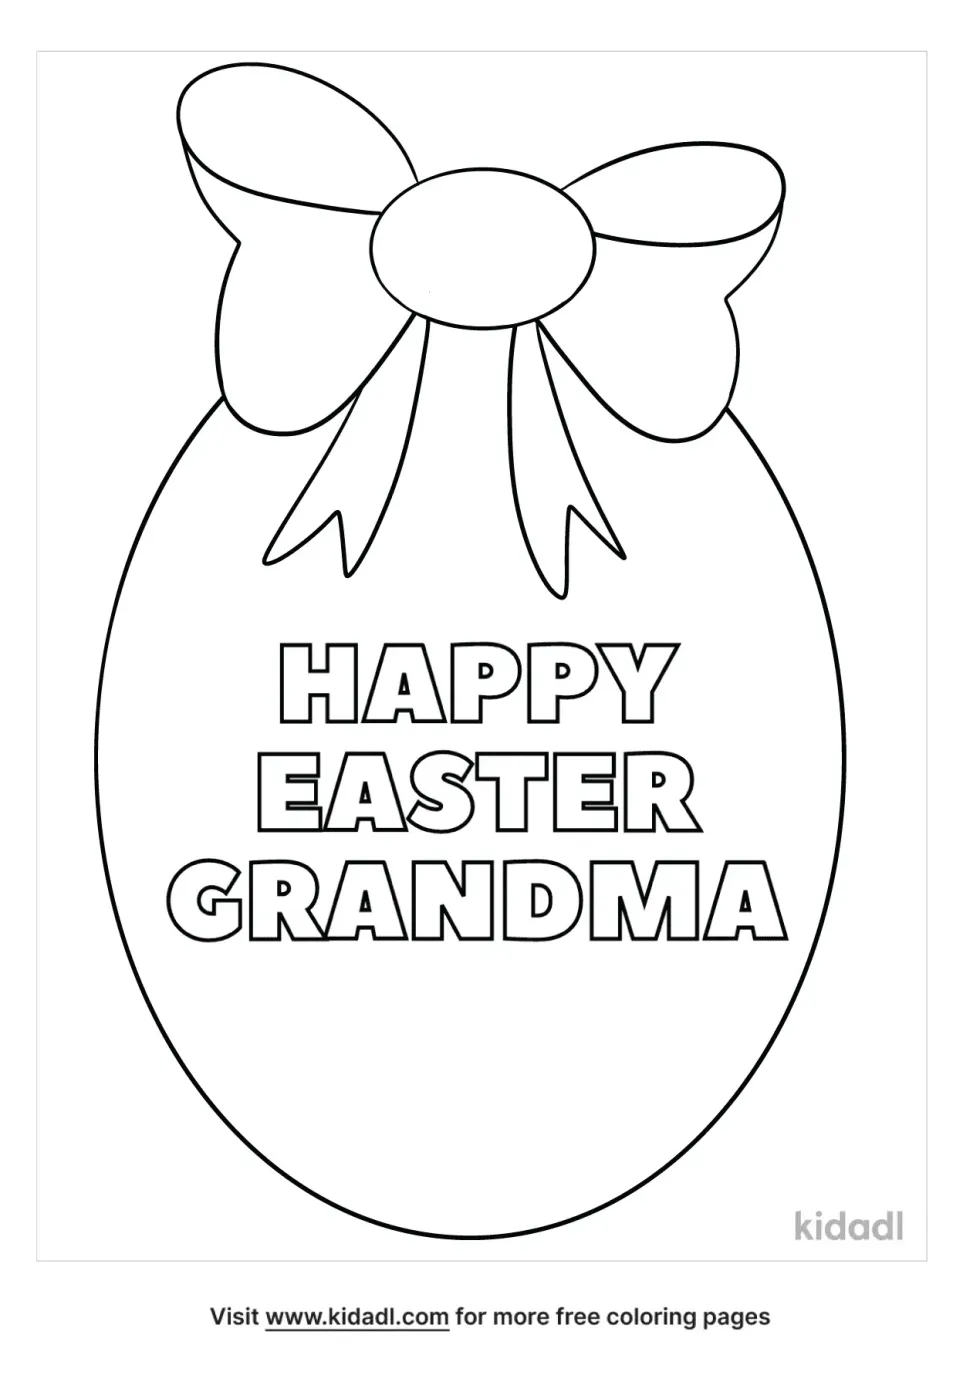 Happy Easter Grandma